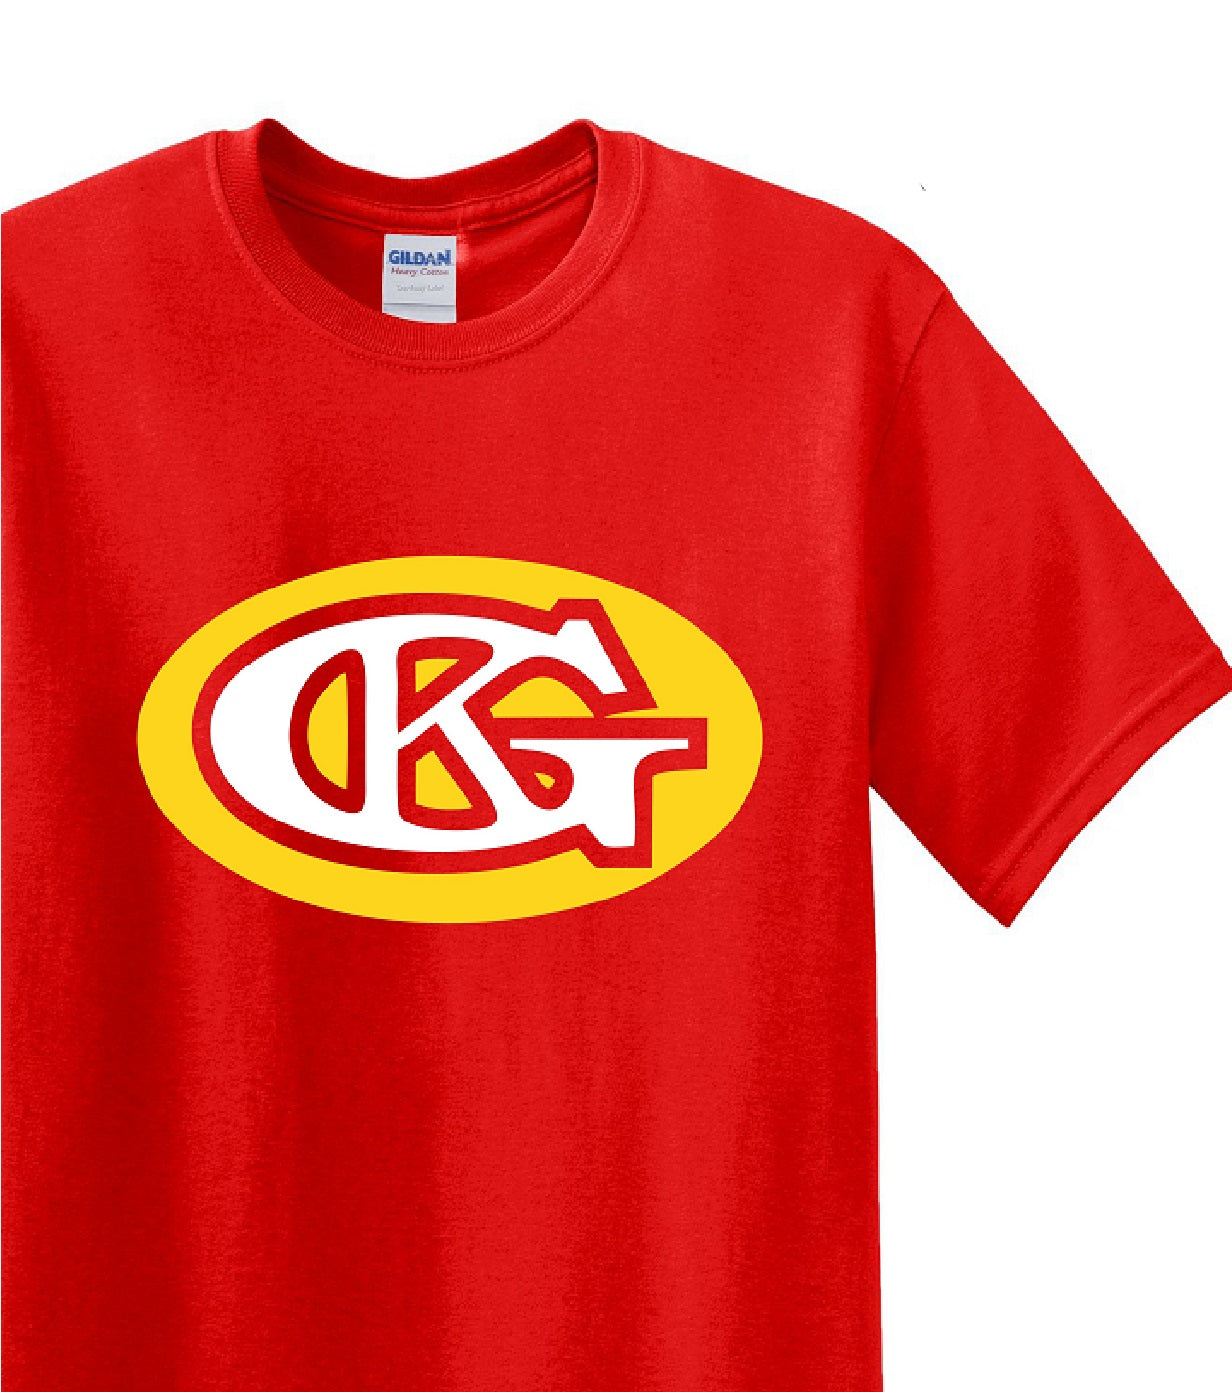 Skate Men's Shirt - CKG (Red) - MYSTYLEMYCLOTHING